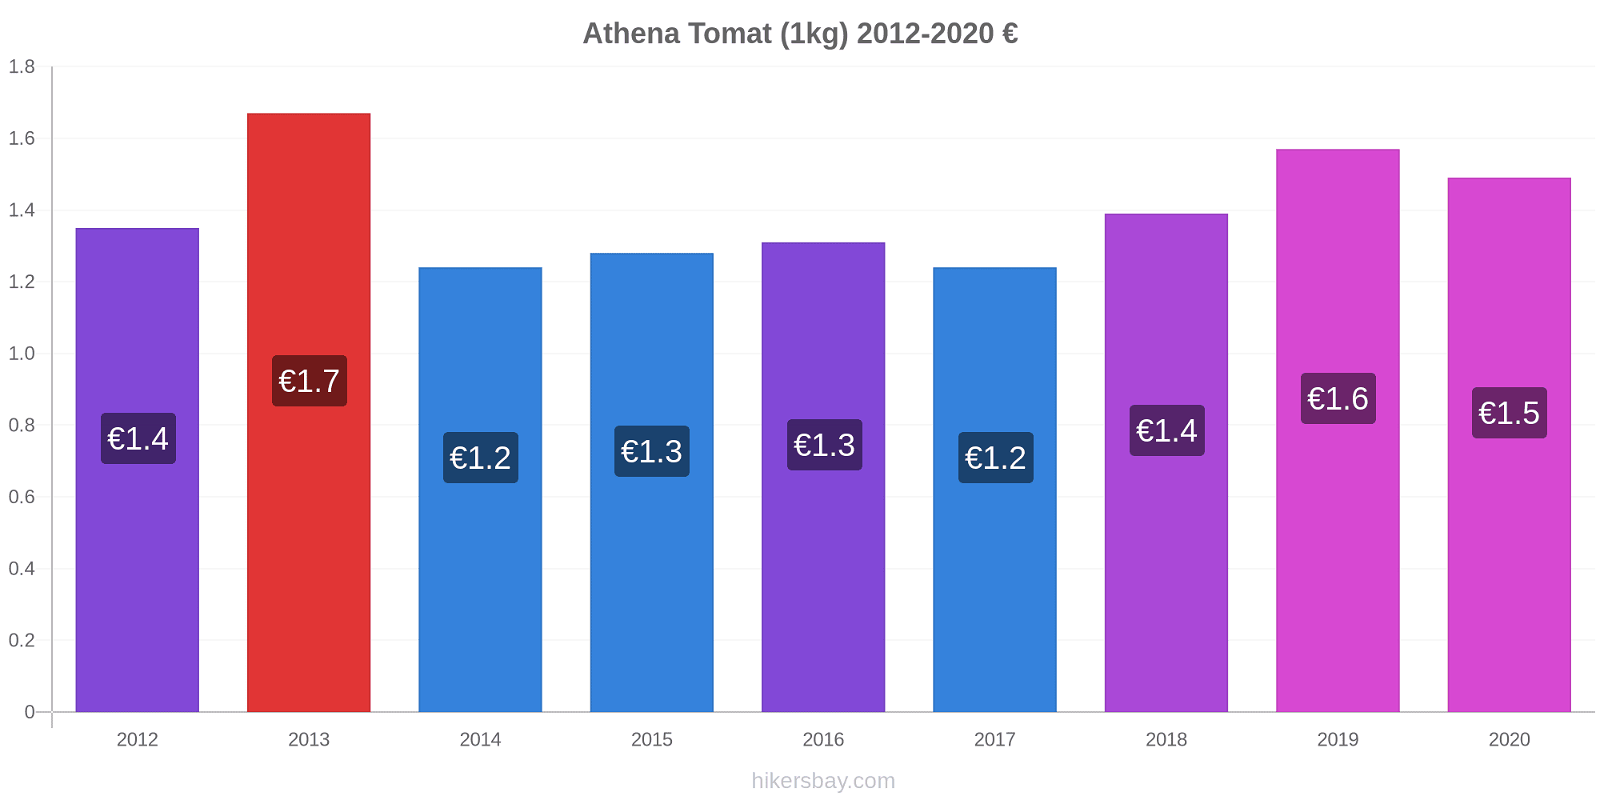 Athena perubahan harga Tomat (1kg) hikersbay.com